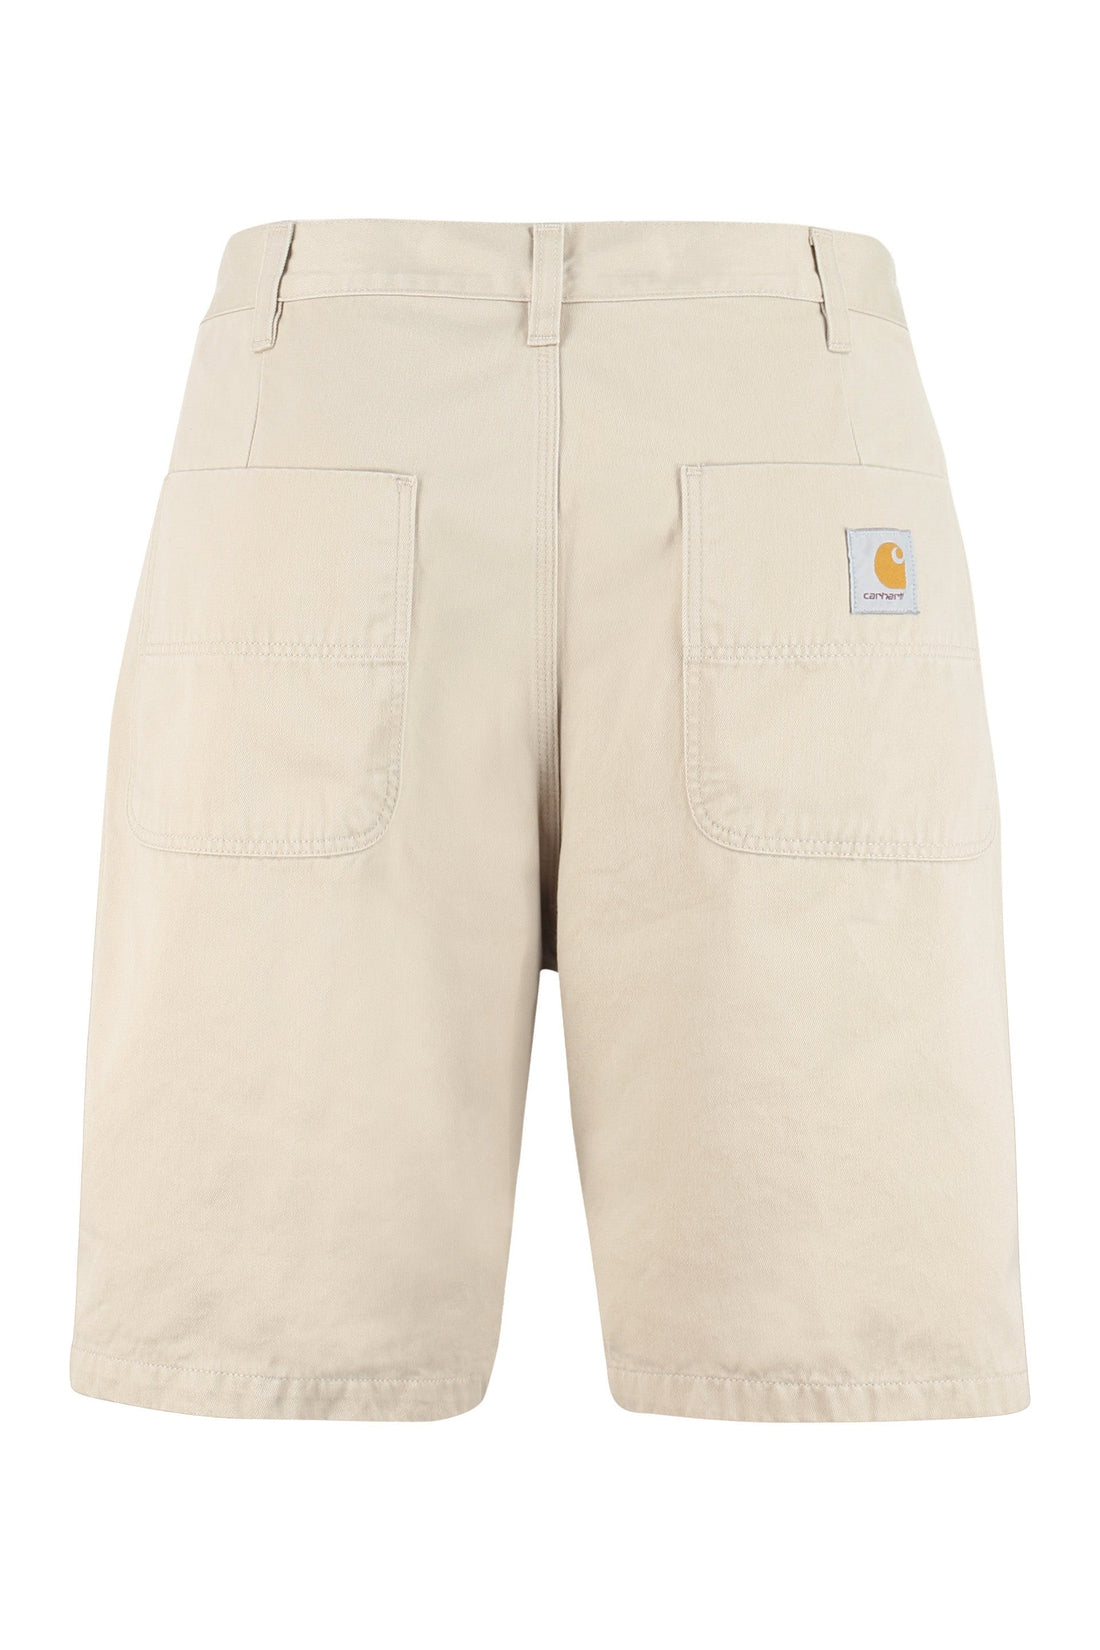 Carhartt-OUTLET-SALE-Abbott cotton bermuda shorts-ARCHIVIST